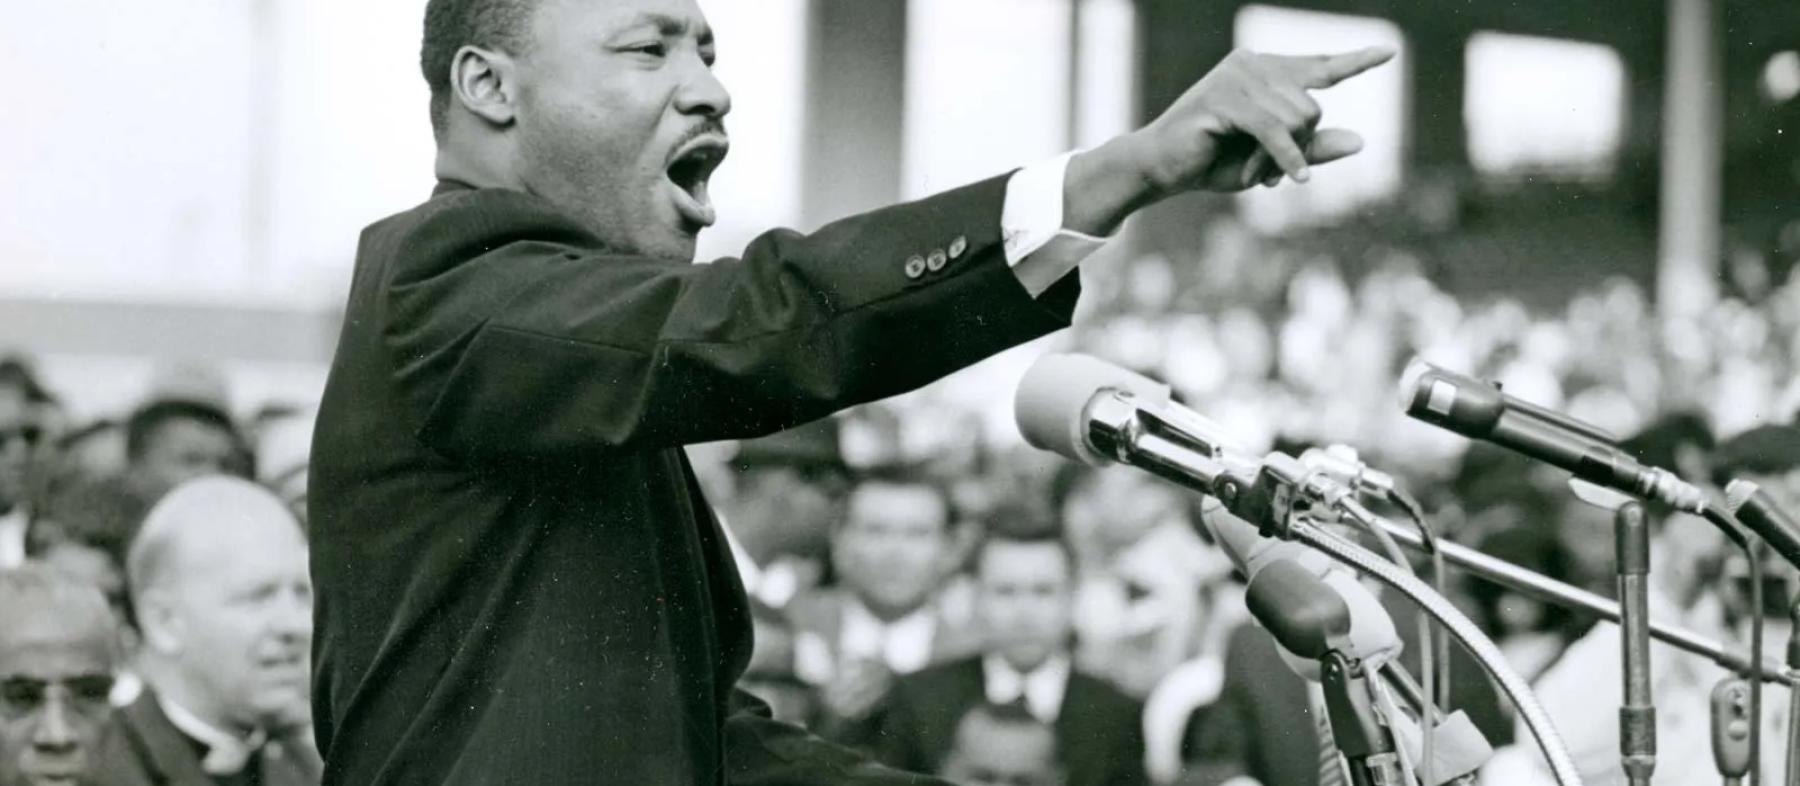 Martin Luther King Jr gives a speech